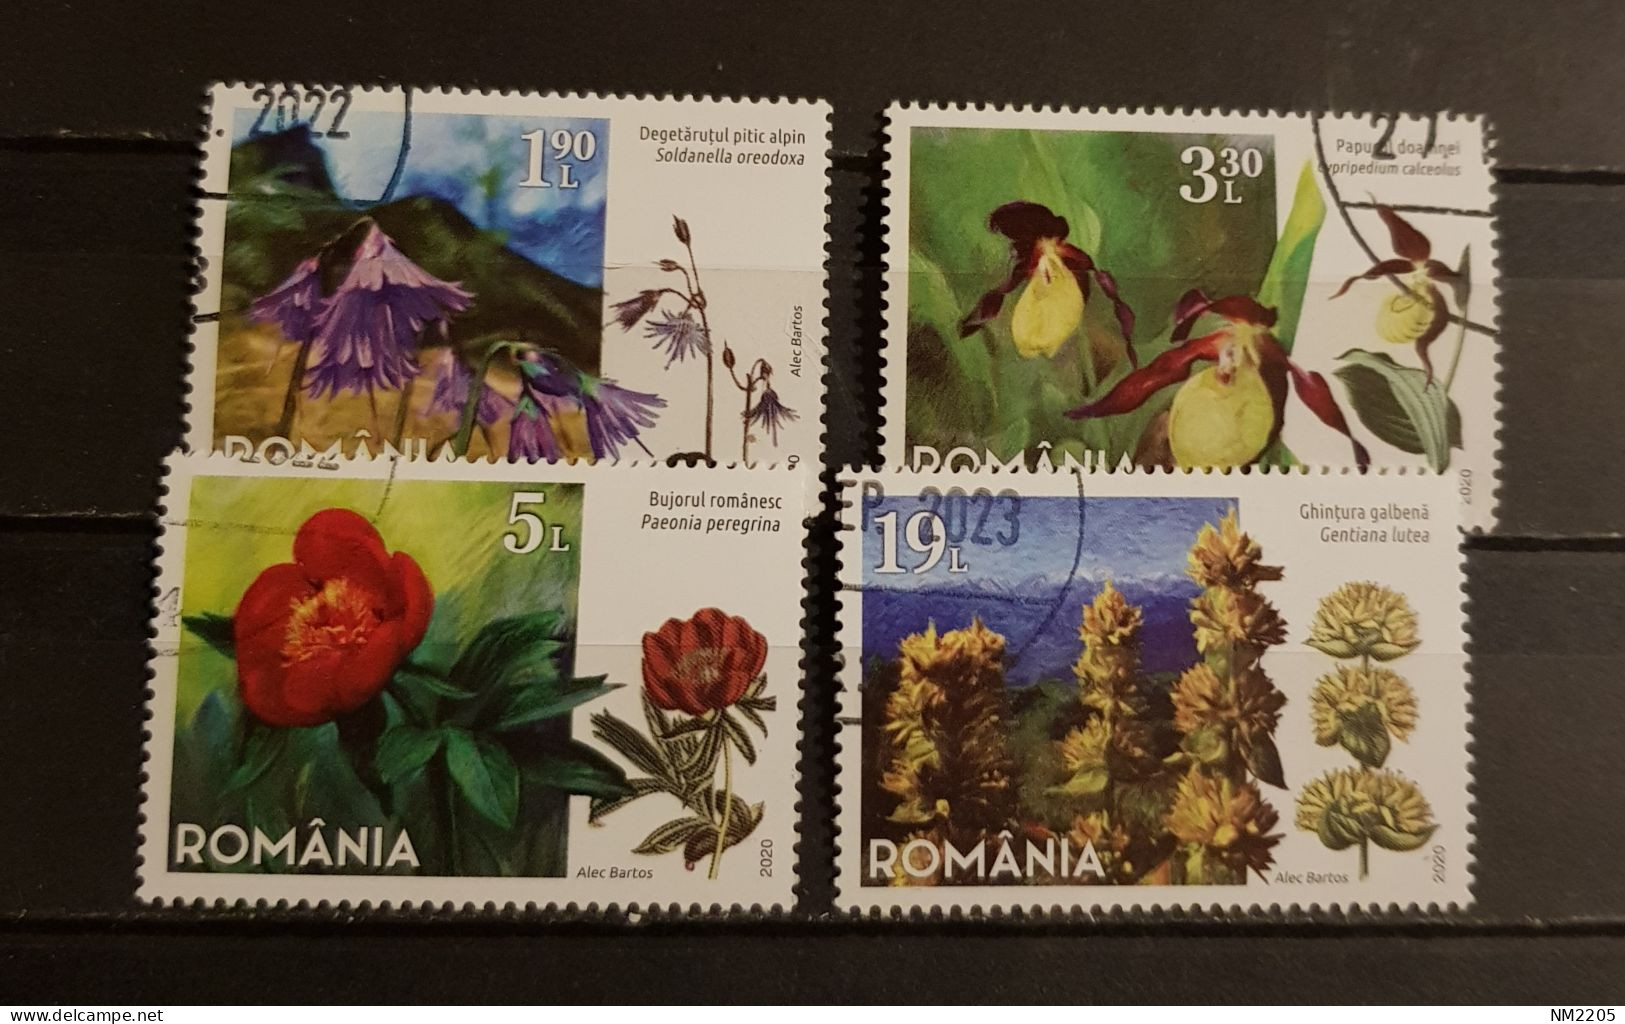 ROMANIA PLANTS GENTIANA LUTEA& PAEONIA PEREGRINA& SOLDANELLA OREODOXA SET CTO-USED - Usado